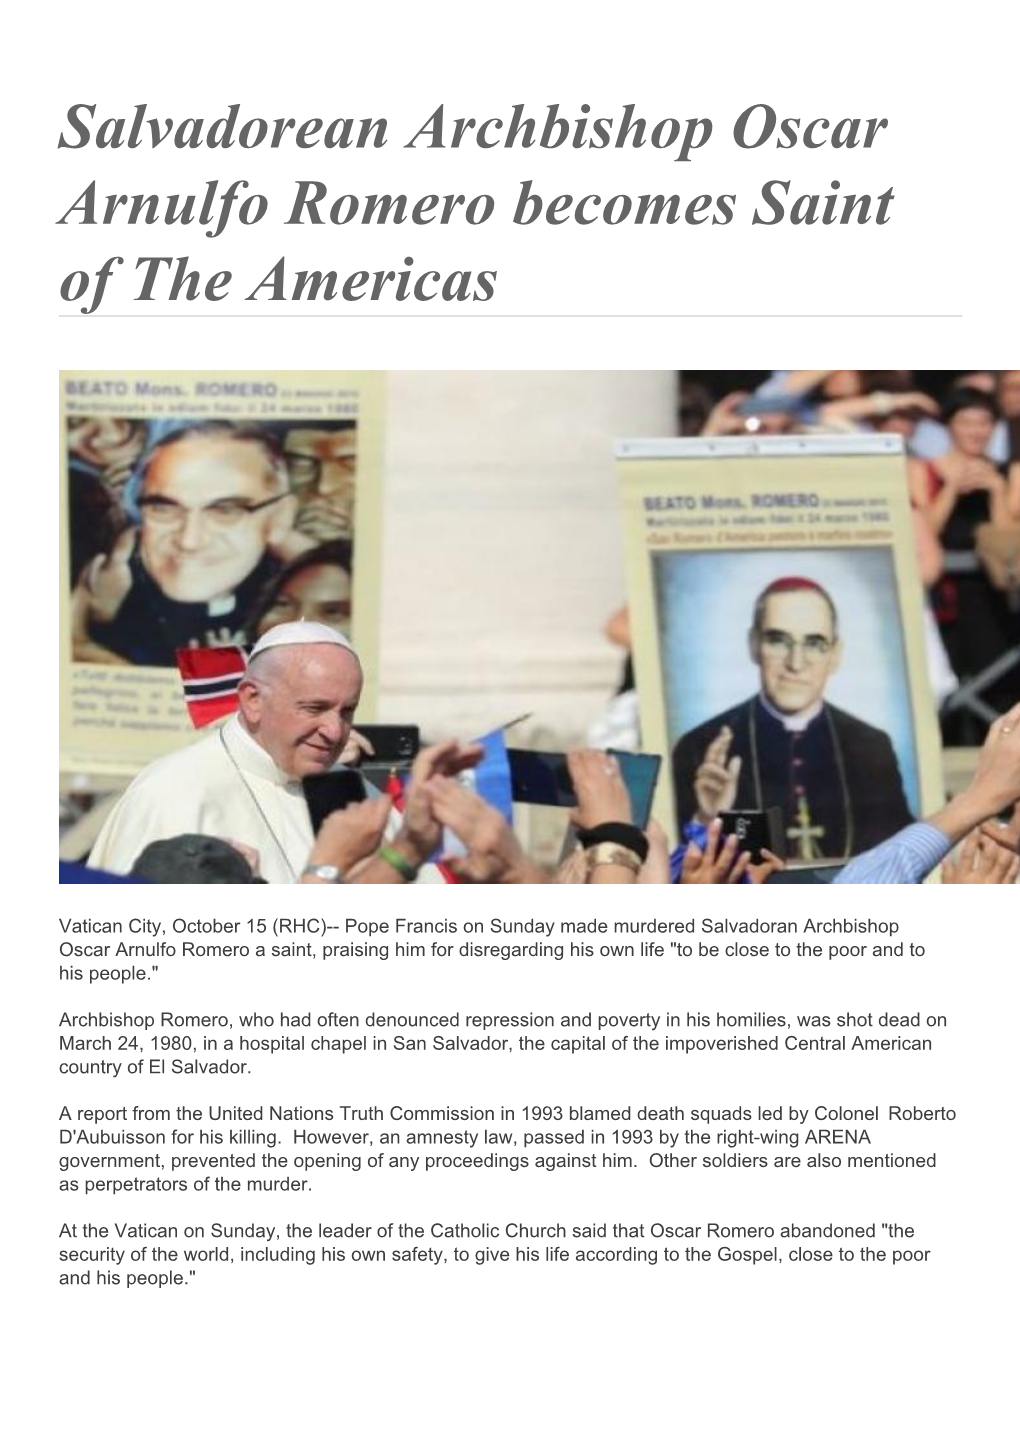 Salvadorean Archbishop Oscar Arnulfo Romero Becomes Saint of the Americas